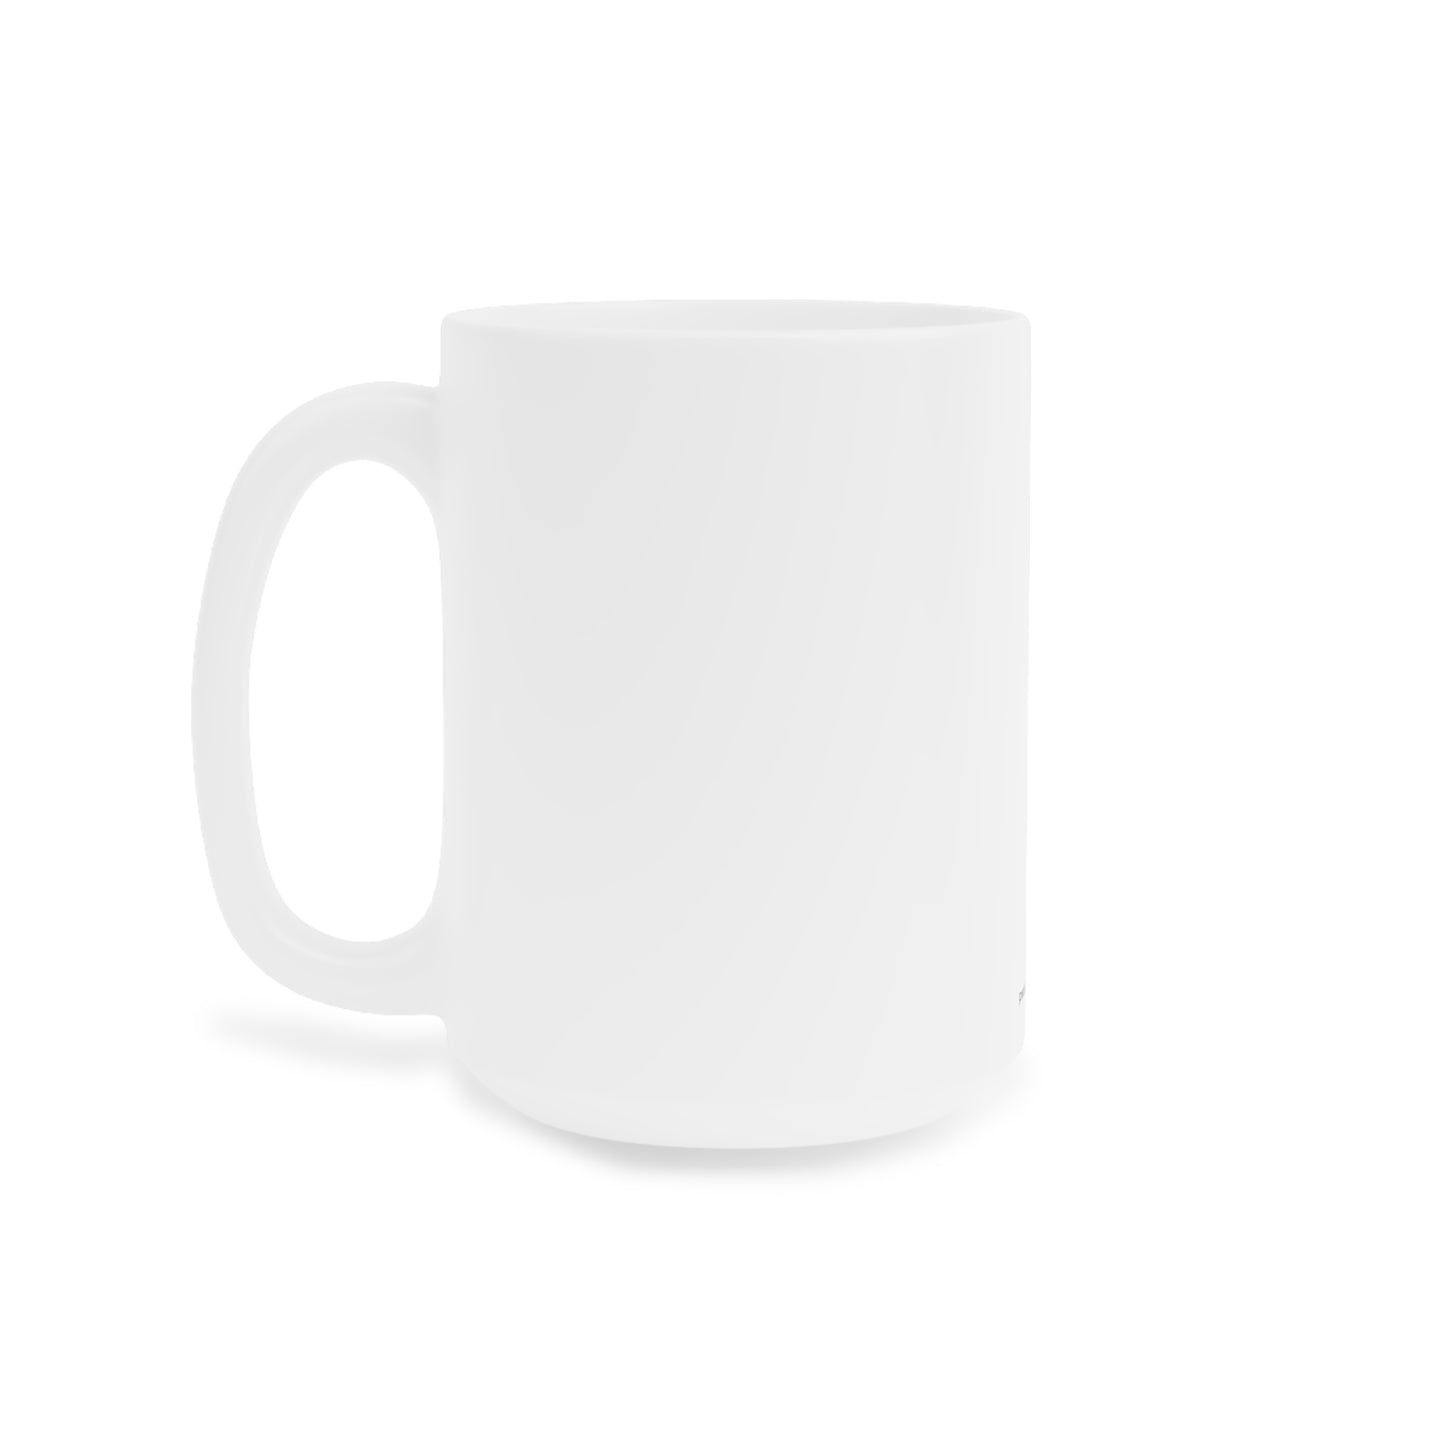 Coffee Mug 15oz - (057) Lanthanum La